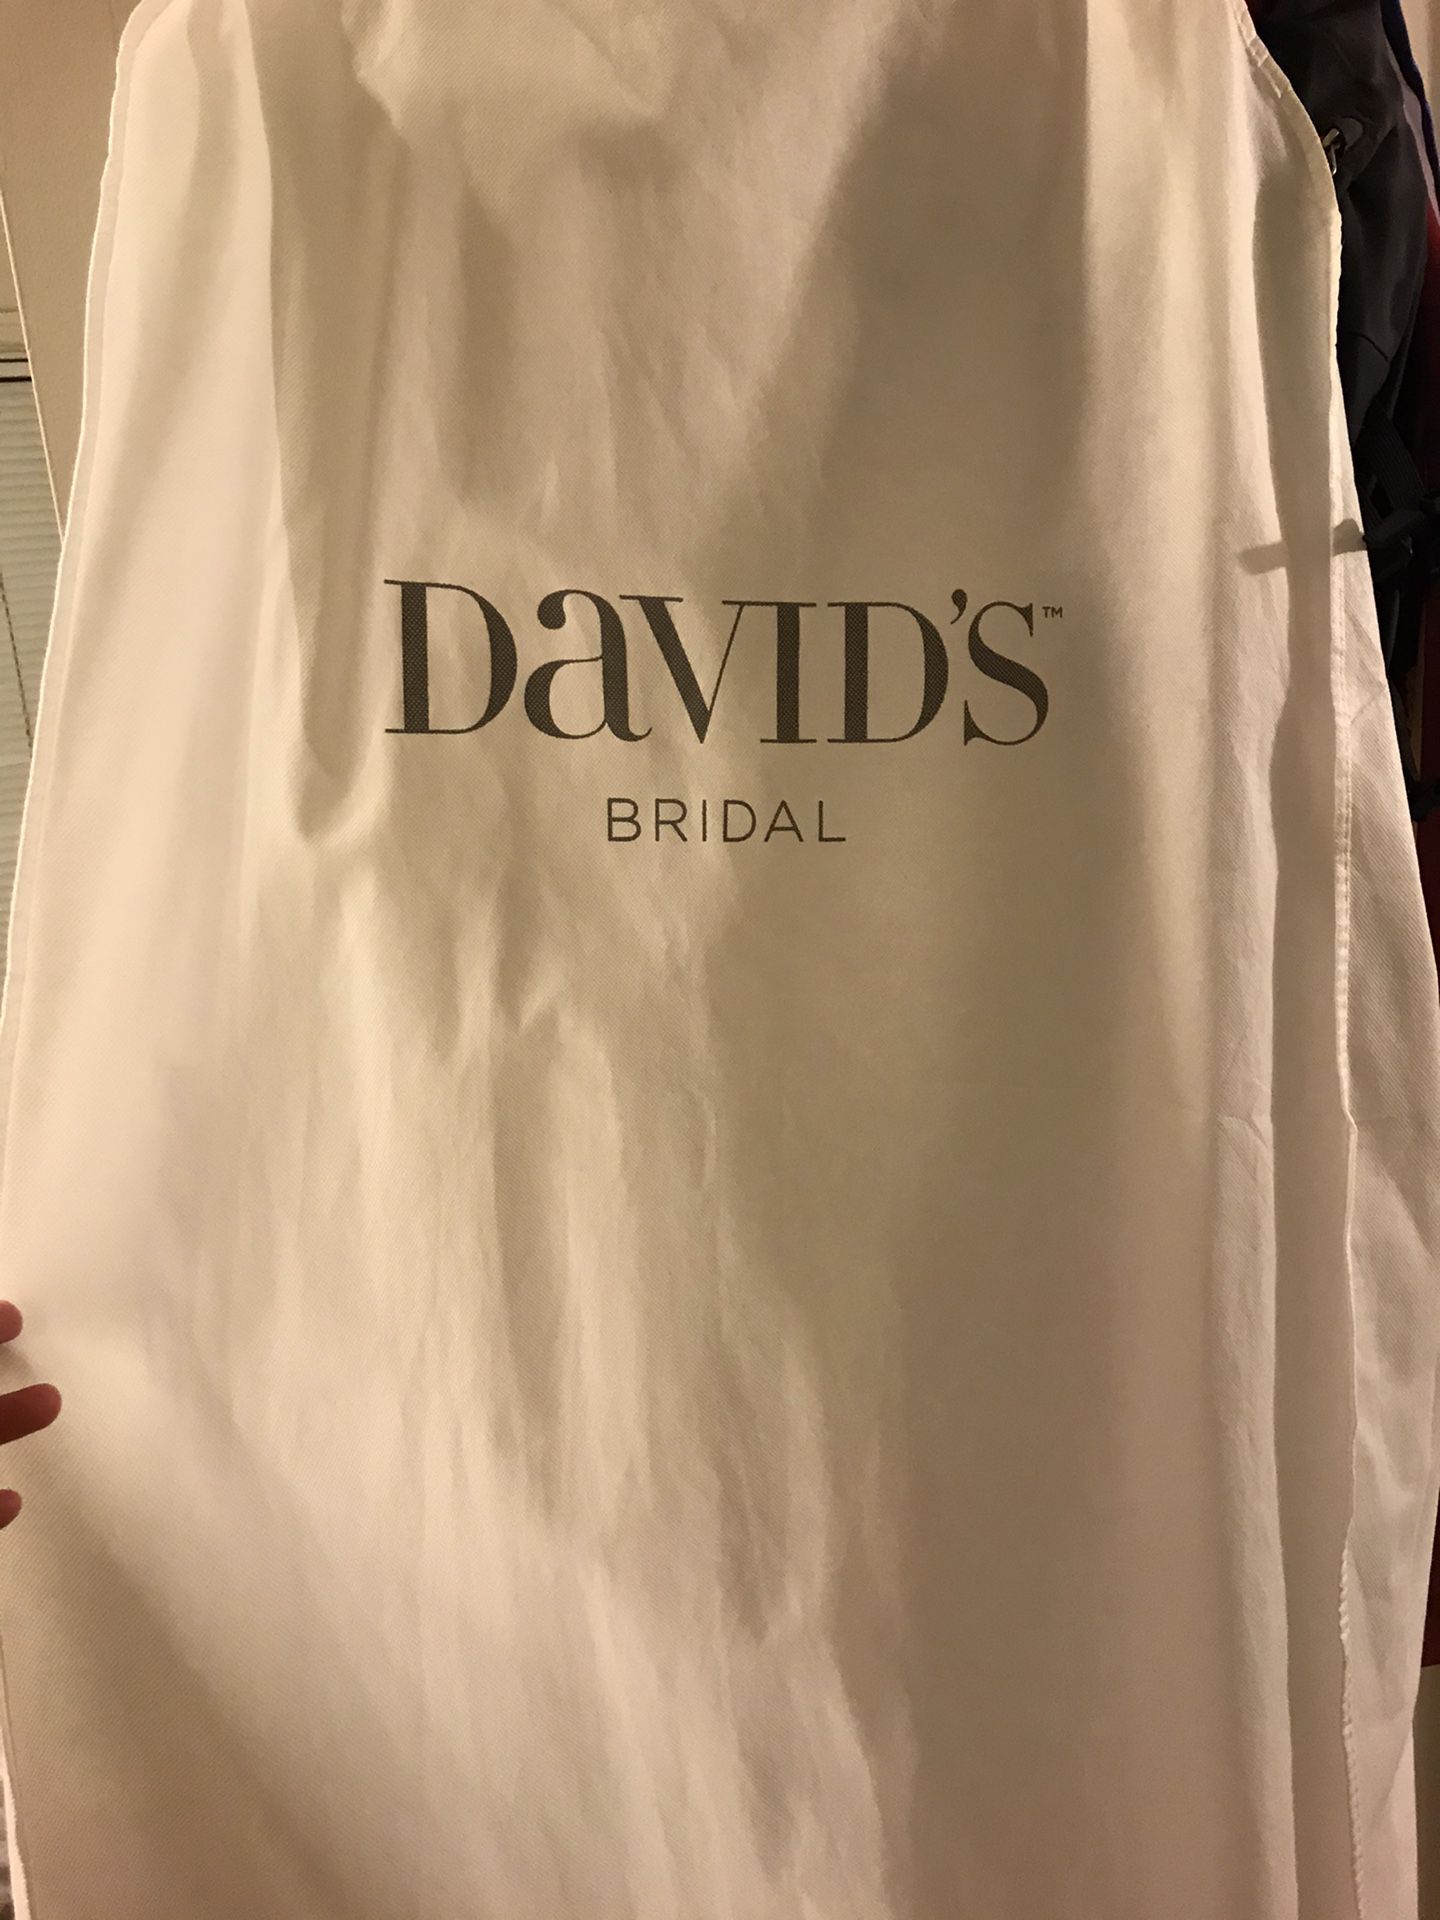 David’s Bridal Garment bag